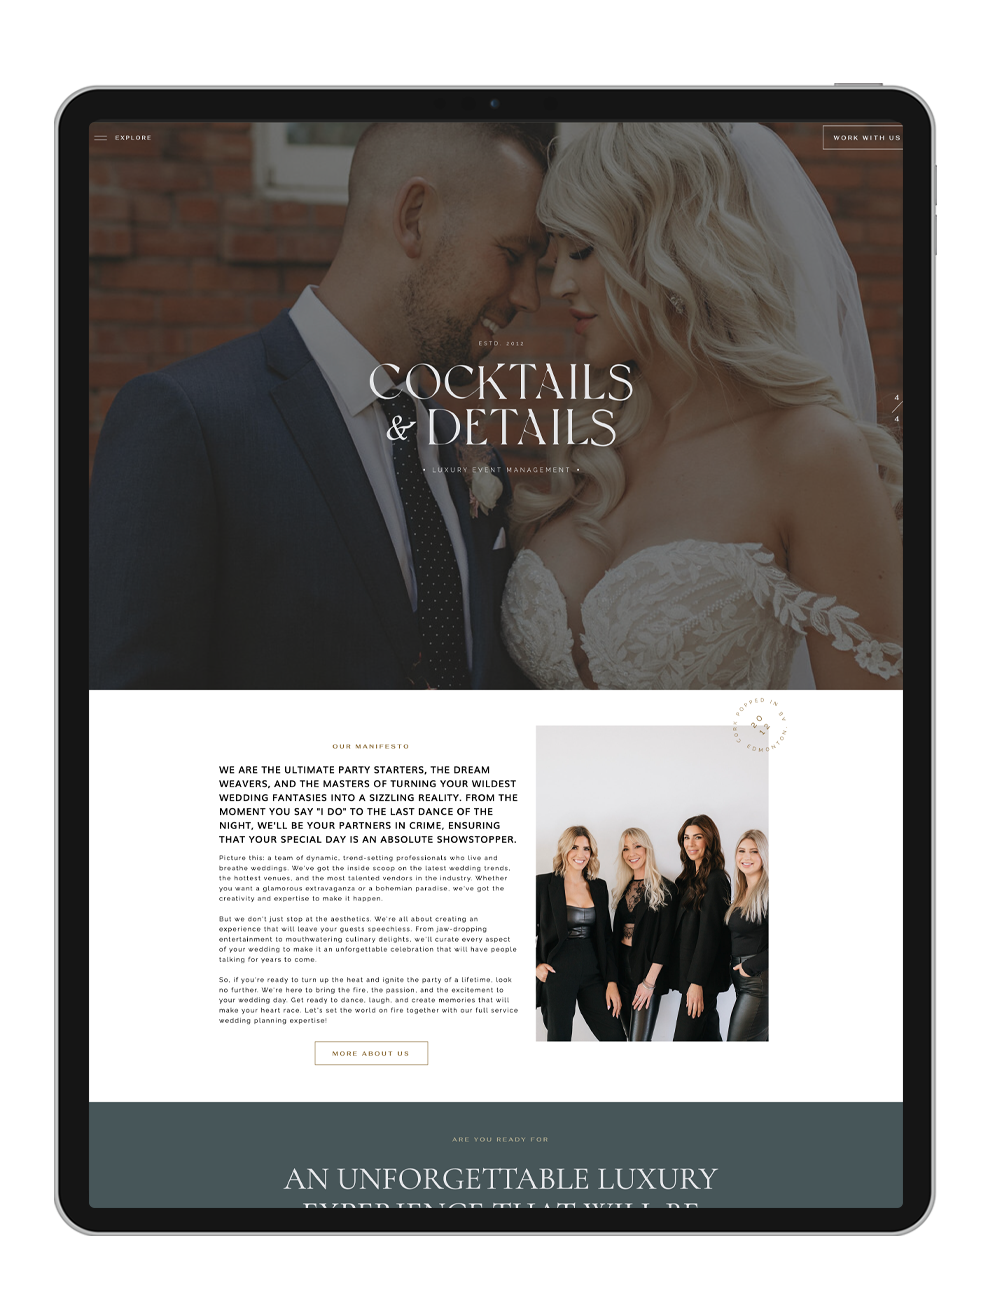 Ipad mockup of wedding planning website design.